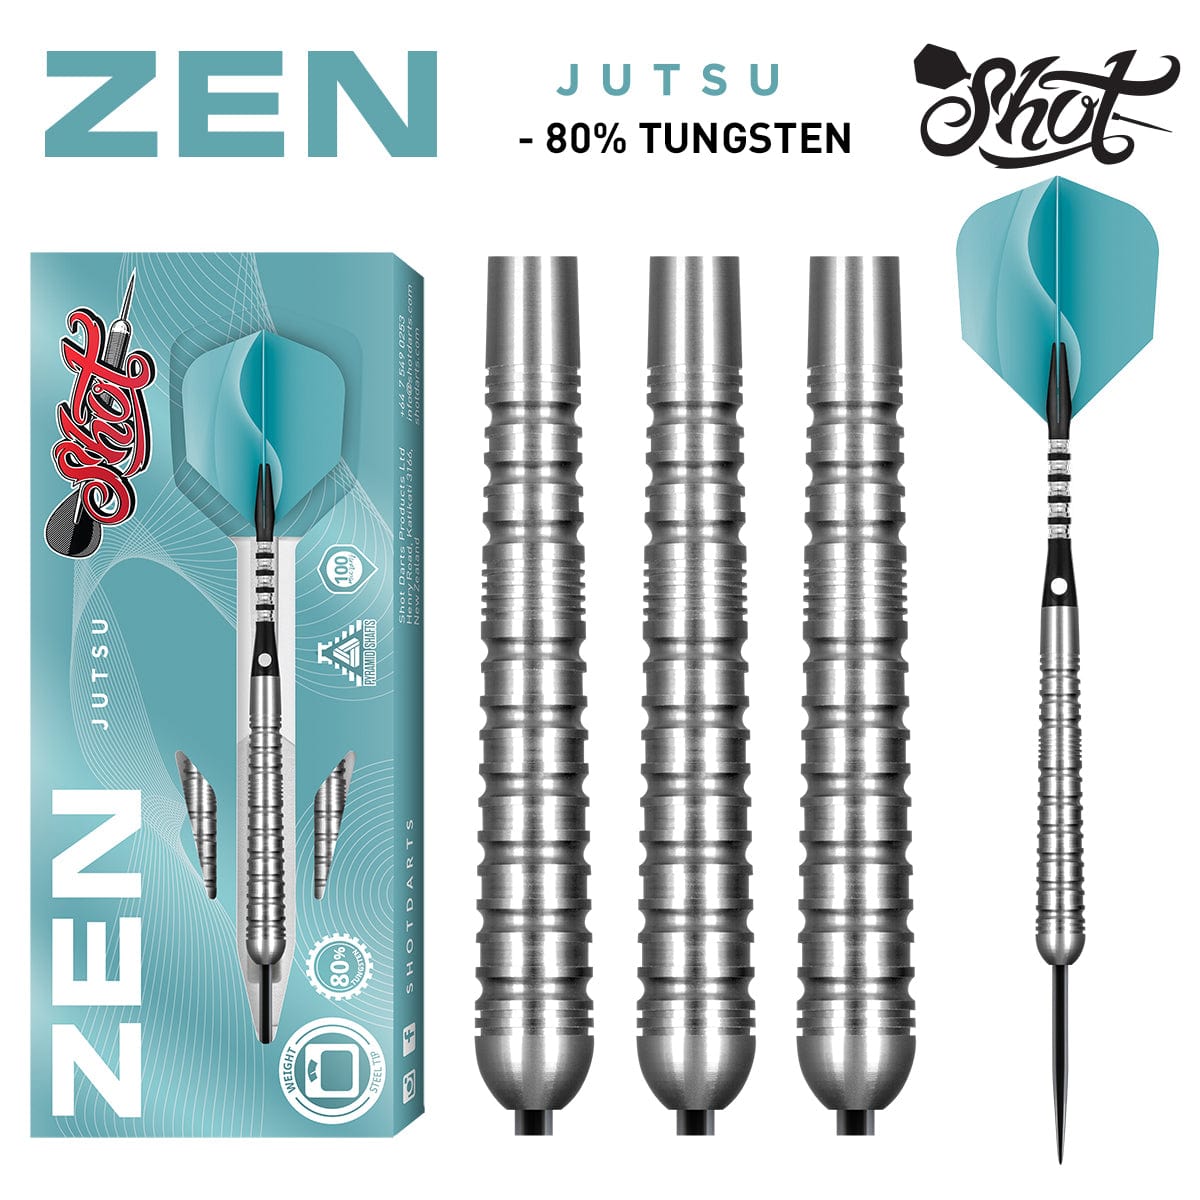 Zen Jutsu Steel Tip Dart Set - 80% Tungsten Barrels